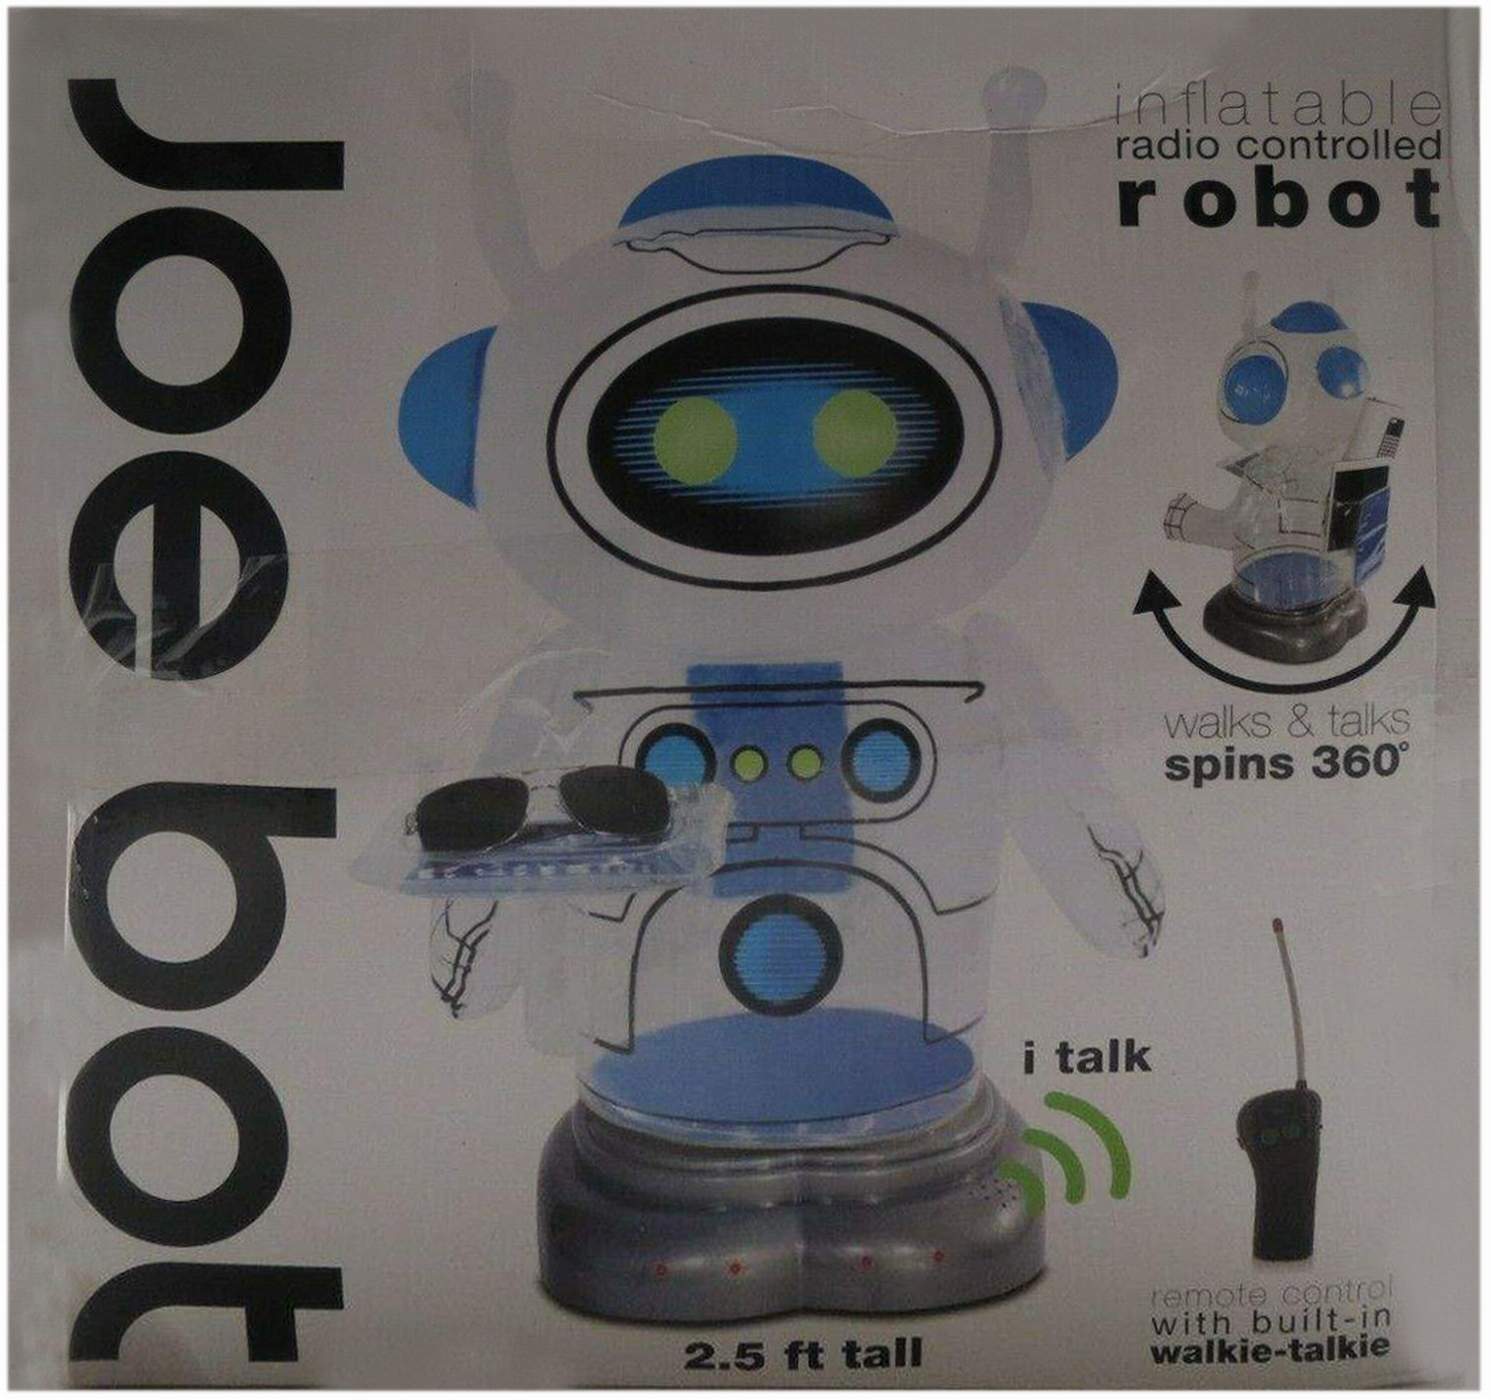 Joe-Bot Robot